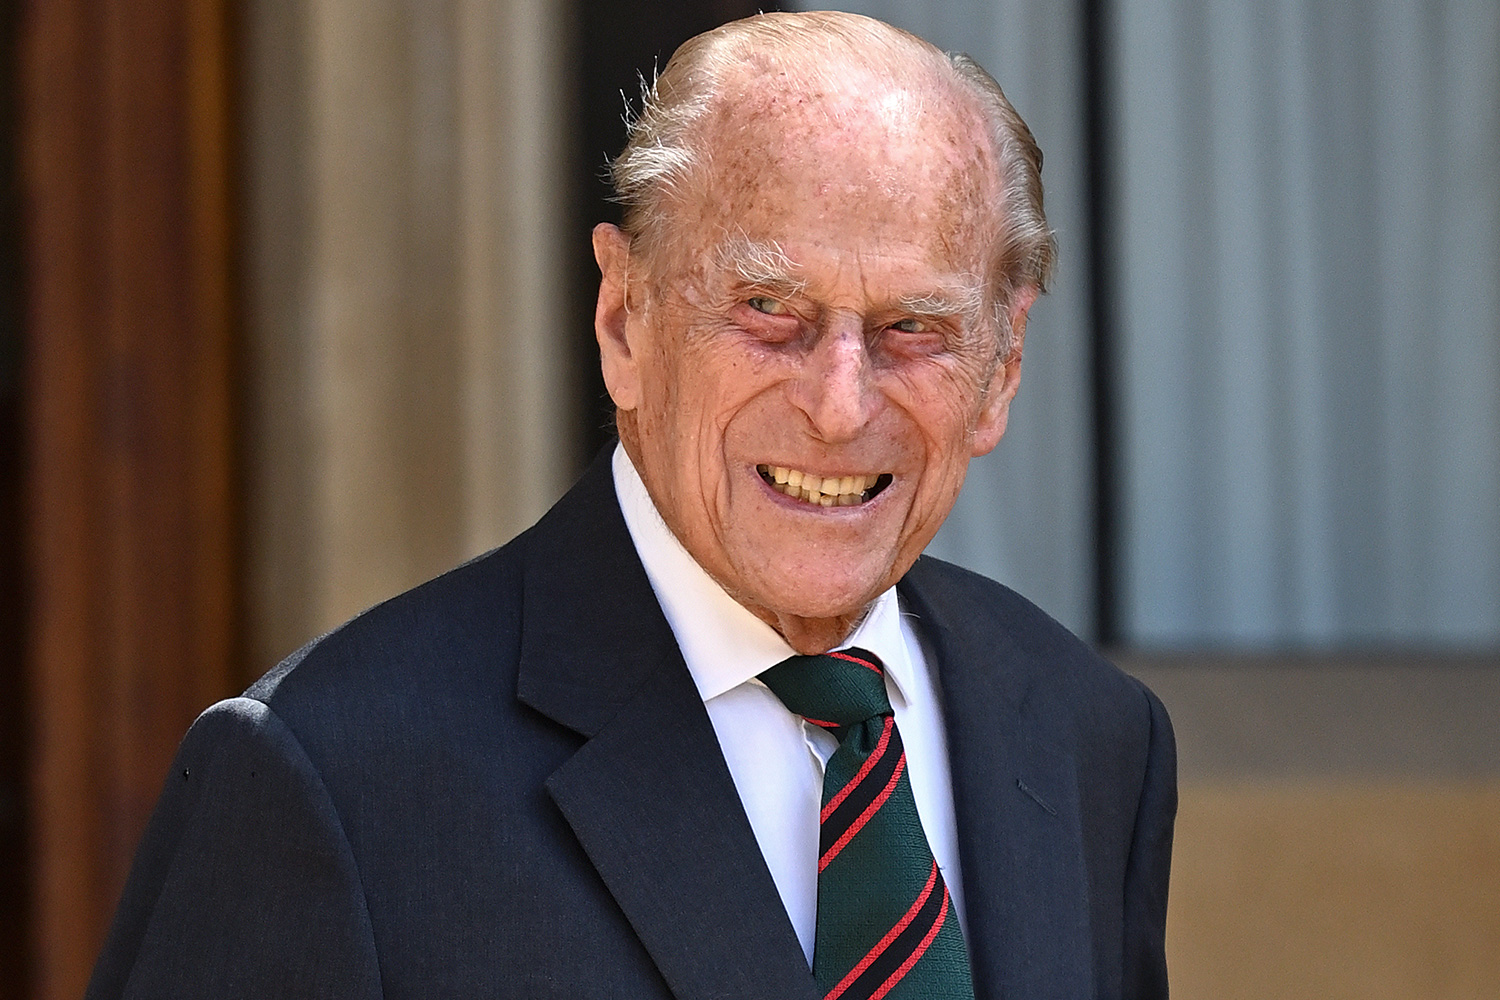 Queen Elizabeth II’s husband, Prince Philip dies at age 99